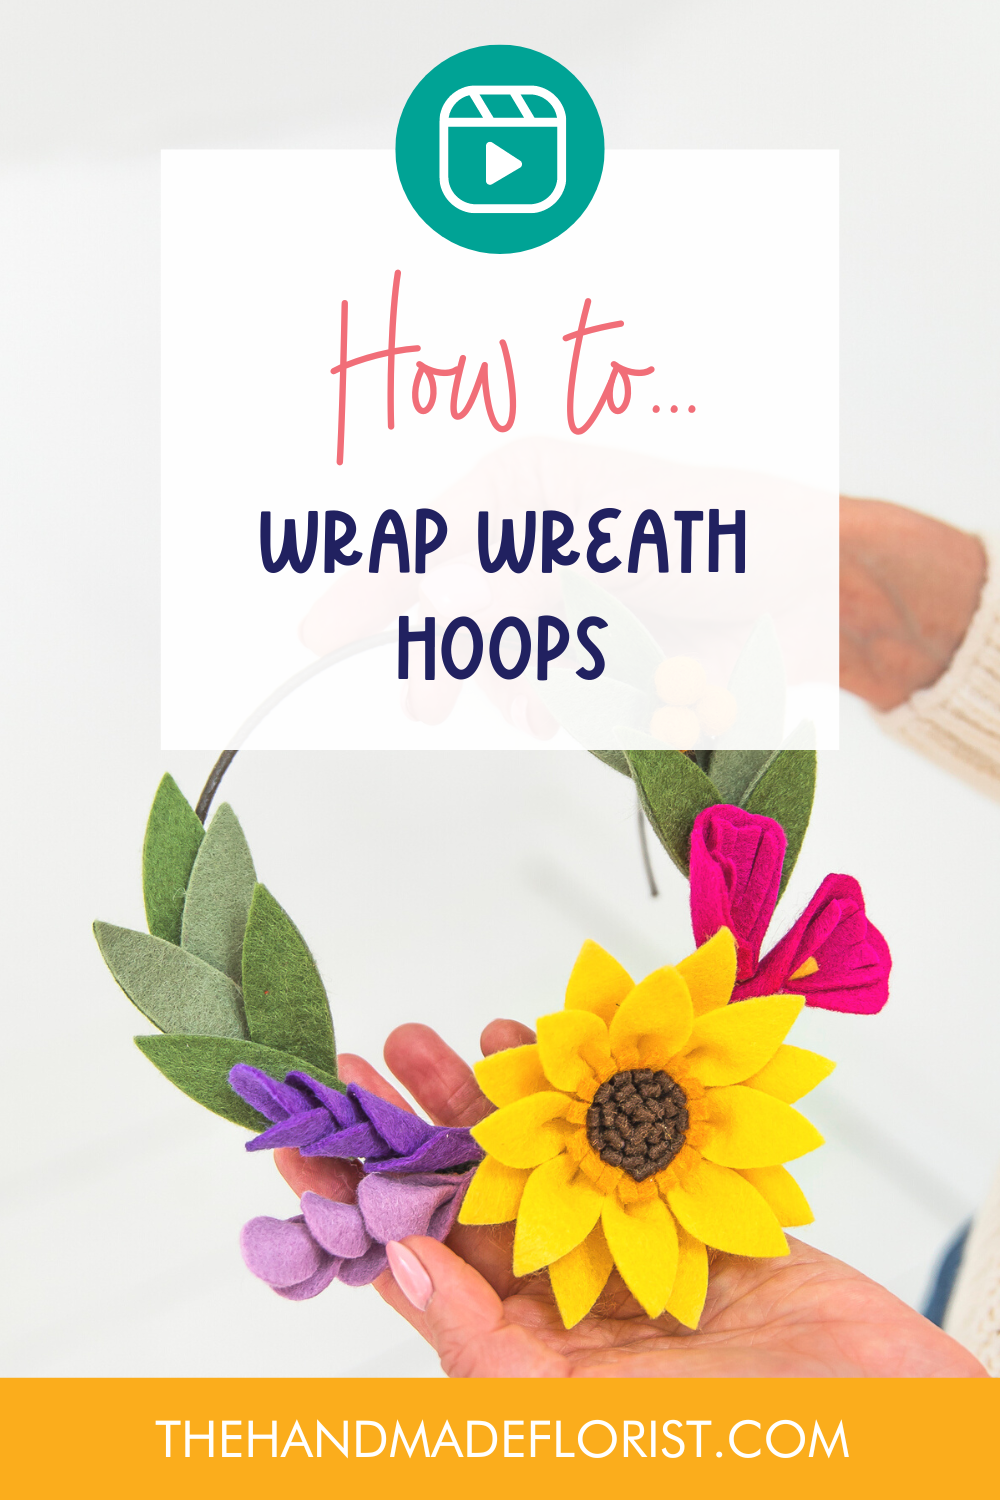 How to wrap wreath hoops video The Handmade Florist